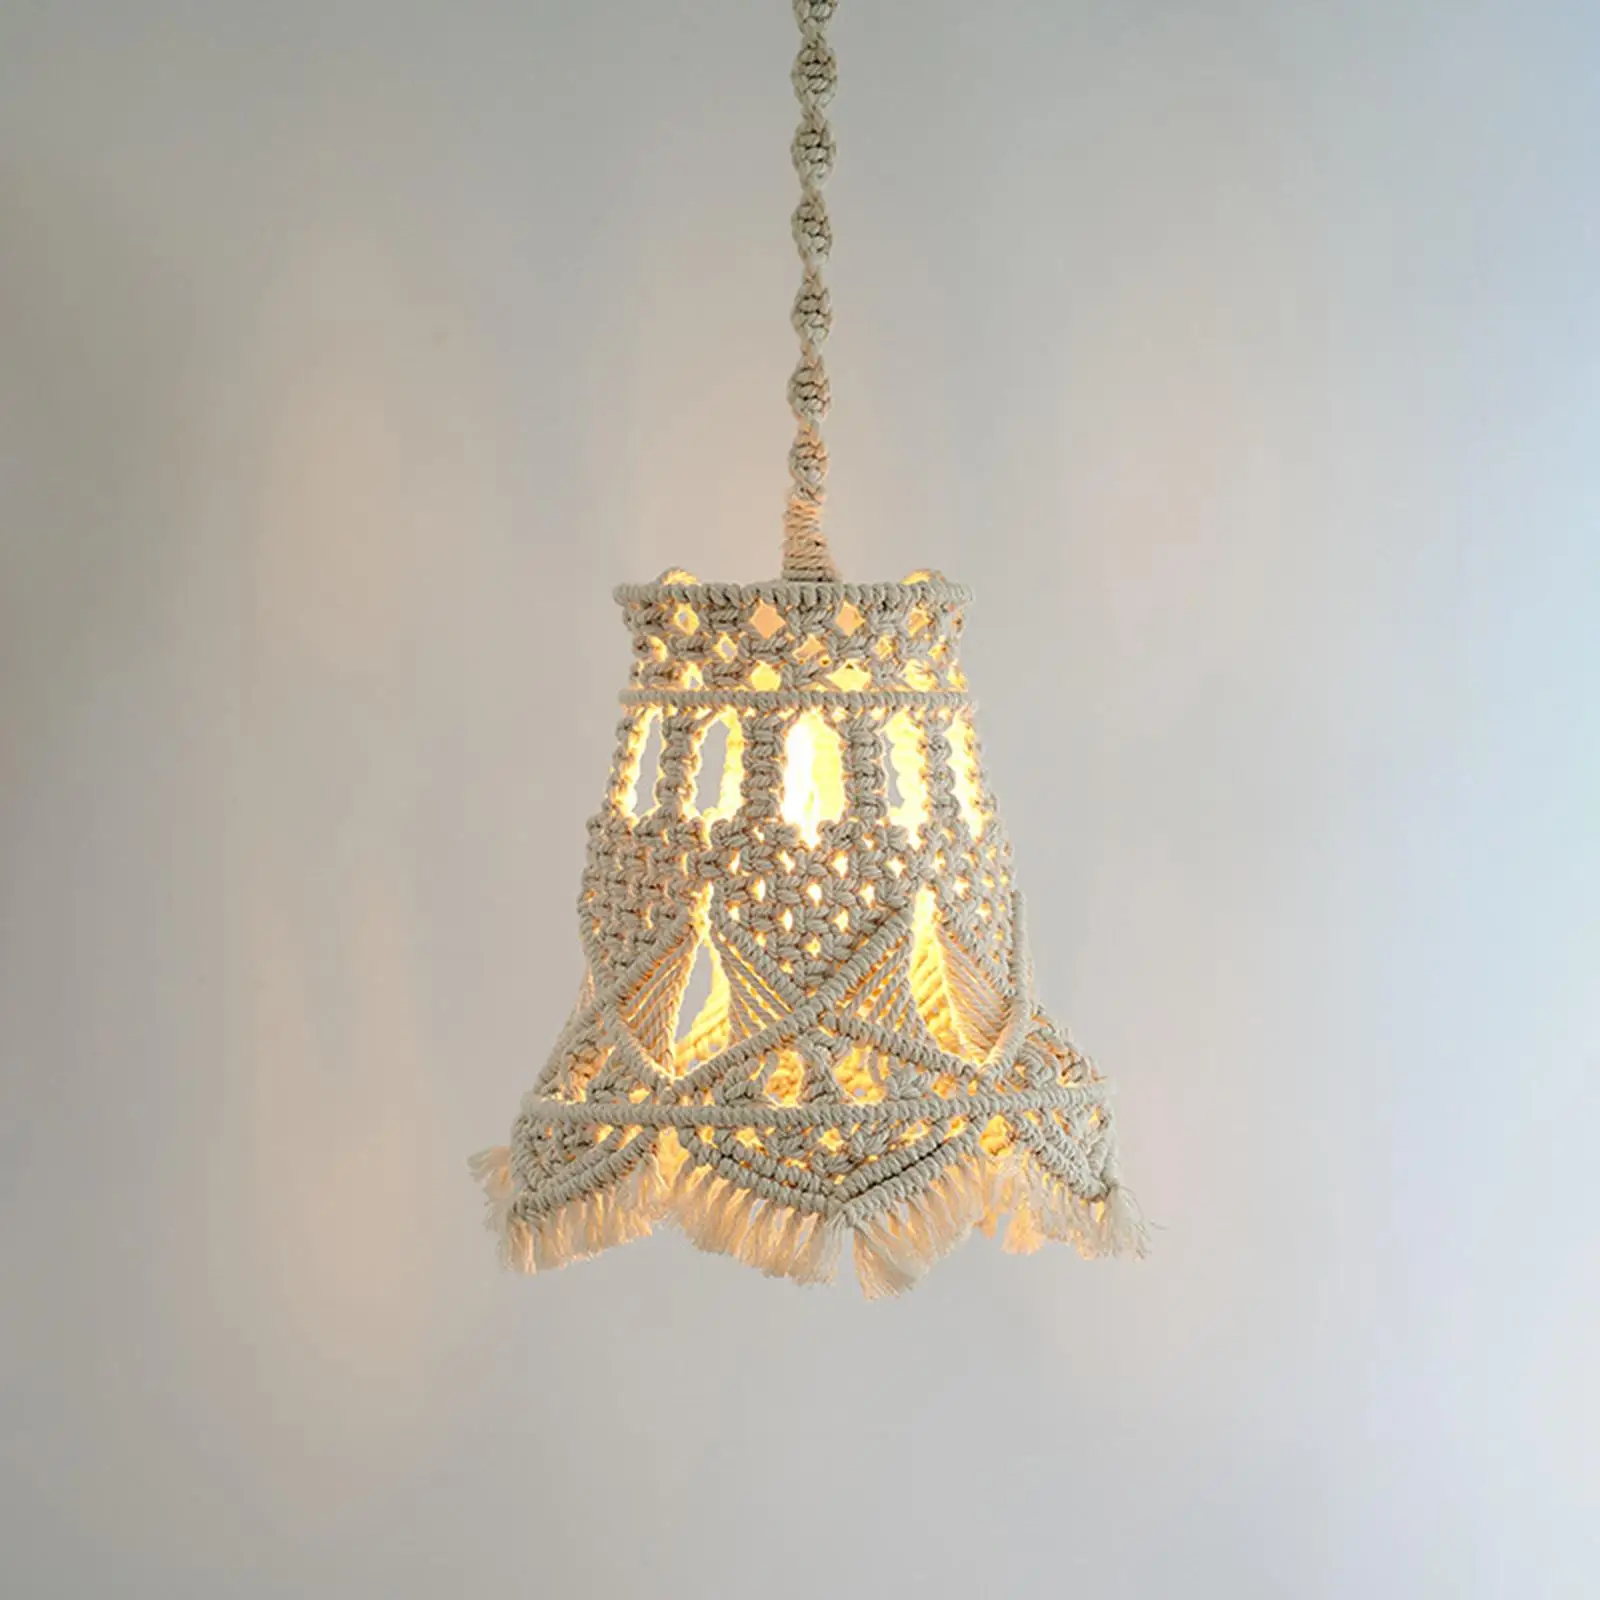 Macrame Tassel Lamp Shade Knitting Hanging Lampshade for Living Room Decor